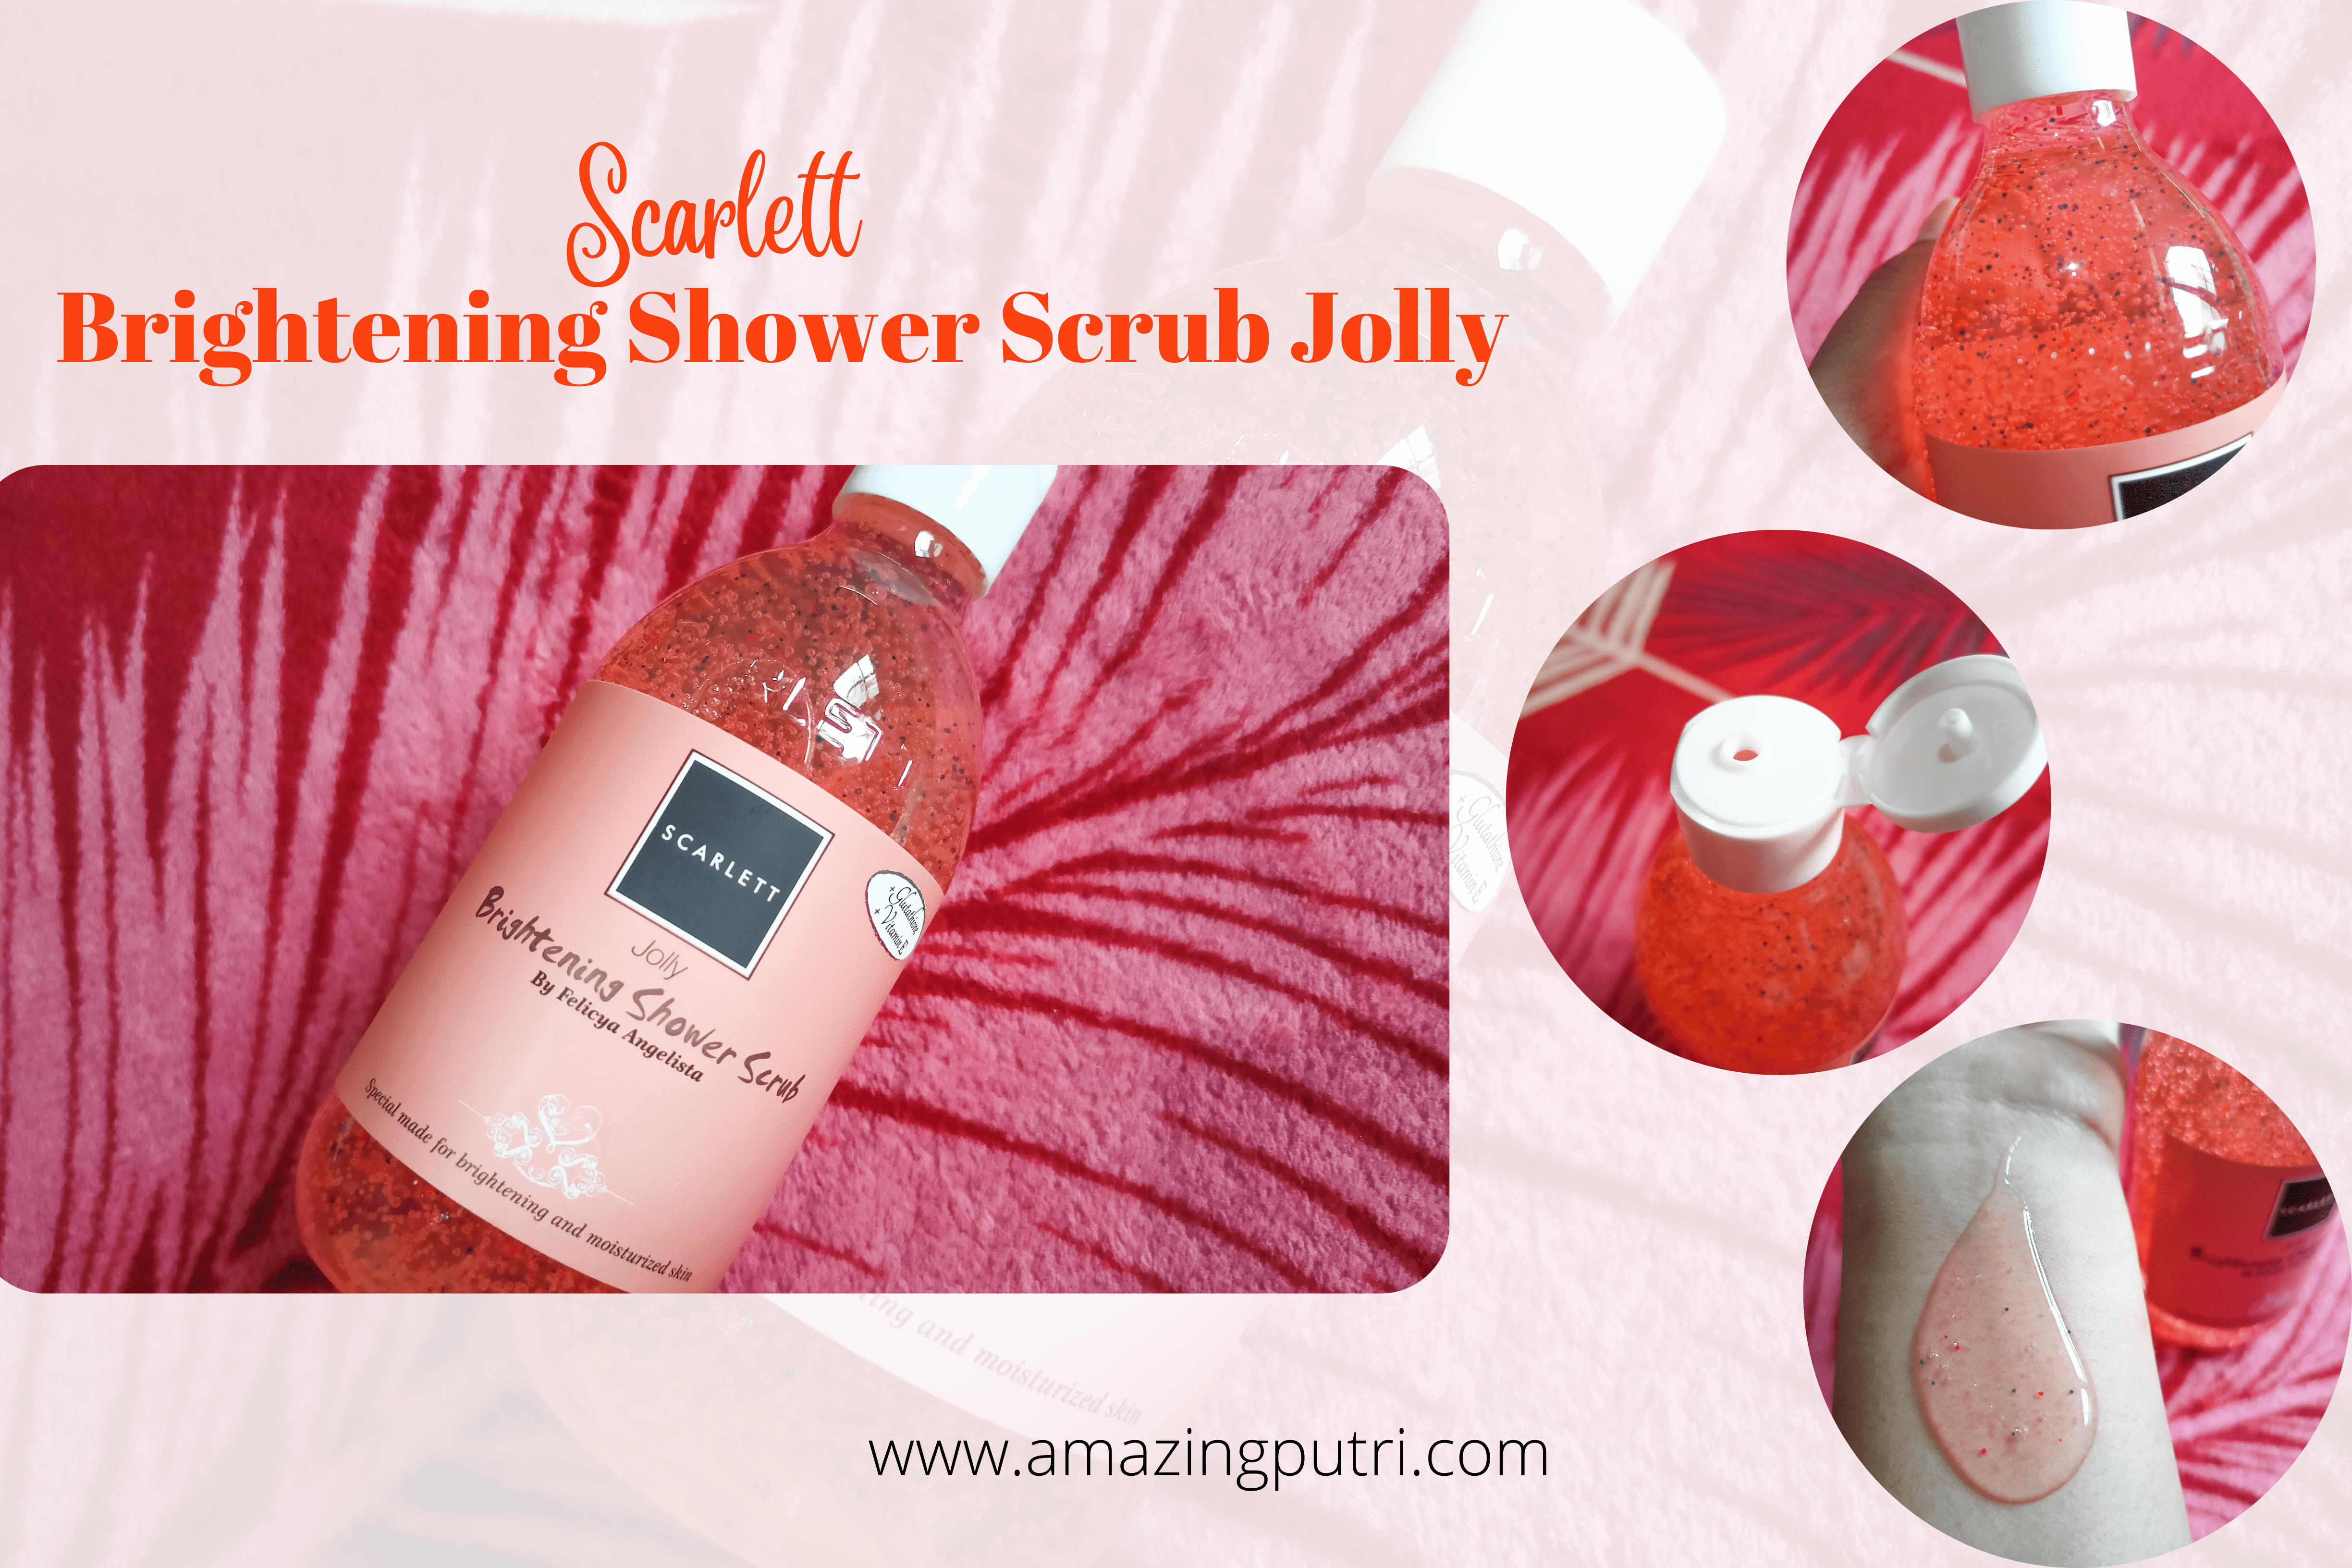 Brightening Shower Scrub Jolly